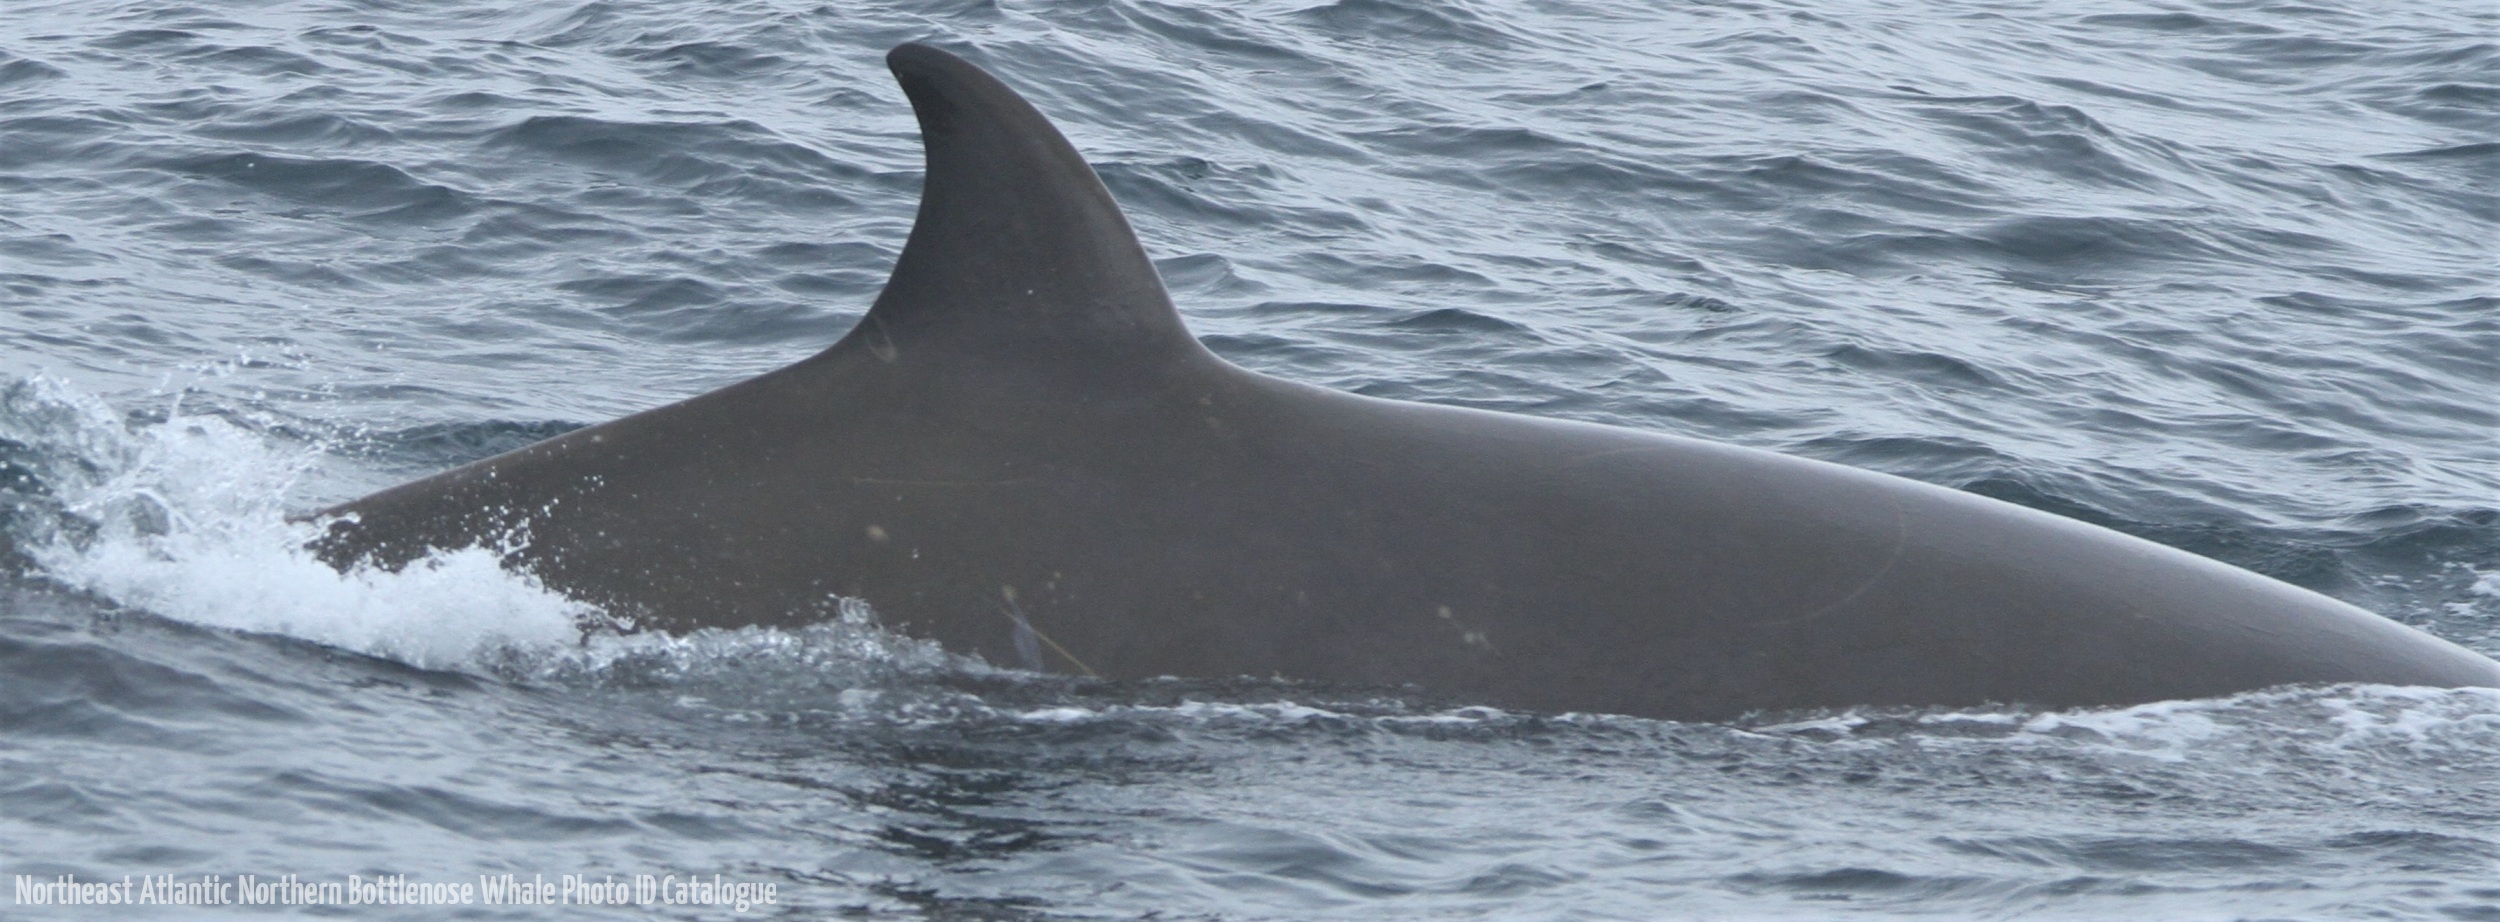 Whale ID: 0272,  Date taken: 03-07-2013,  Photographer: Paul H. Ensor